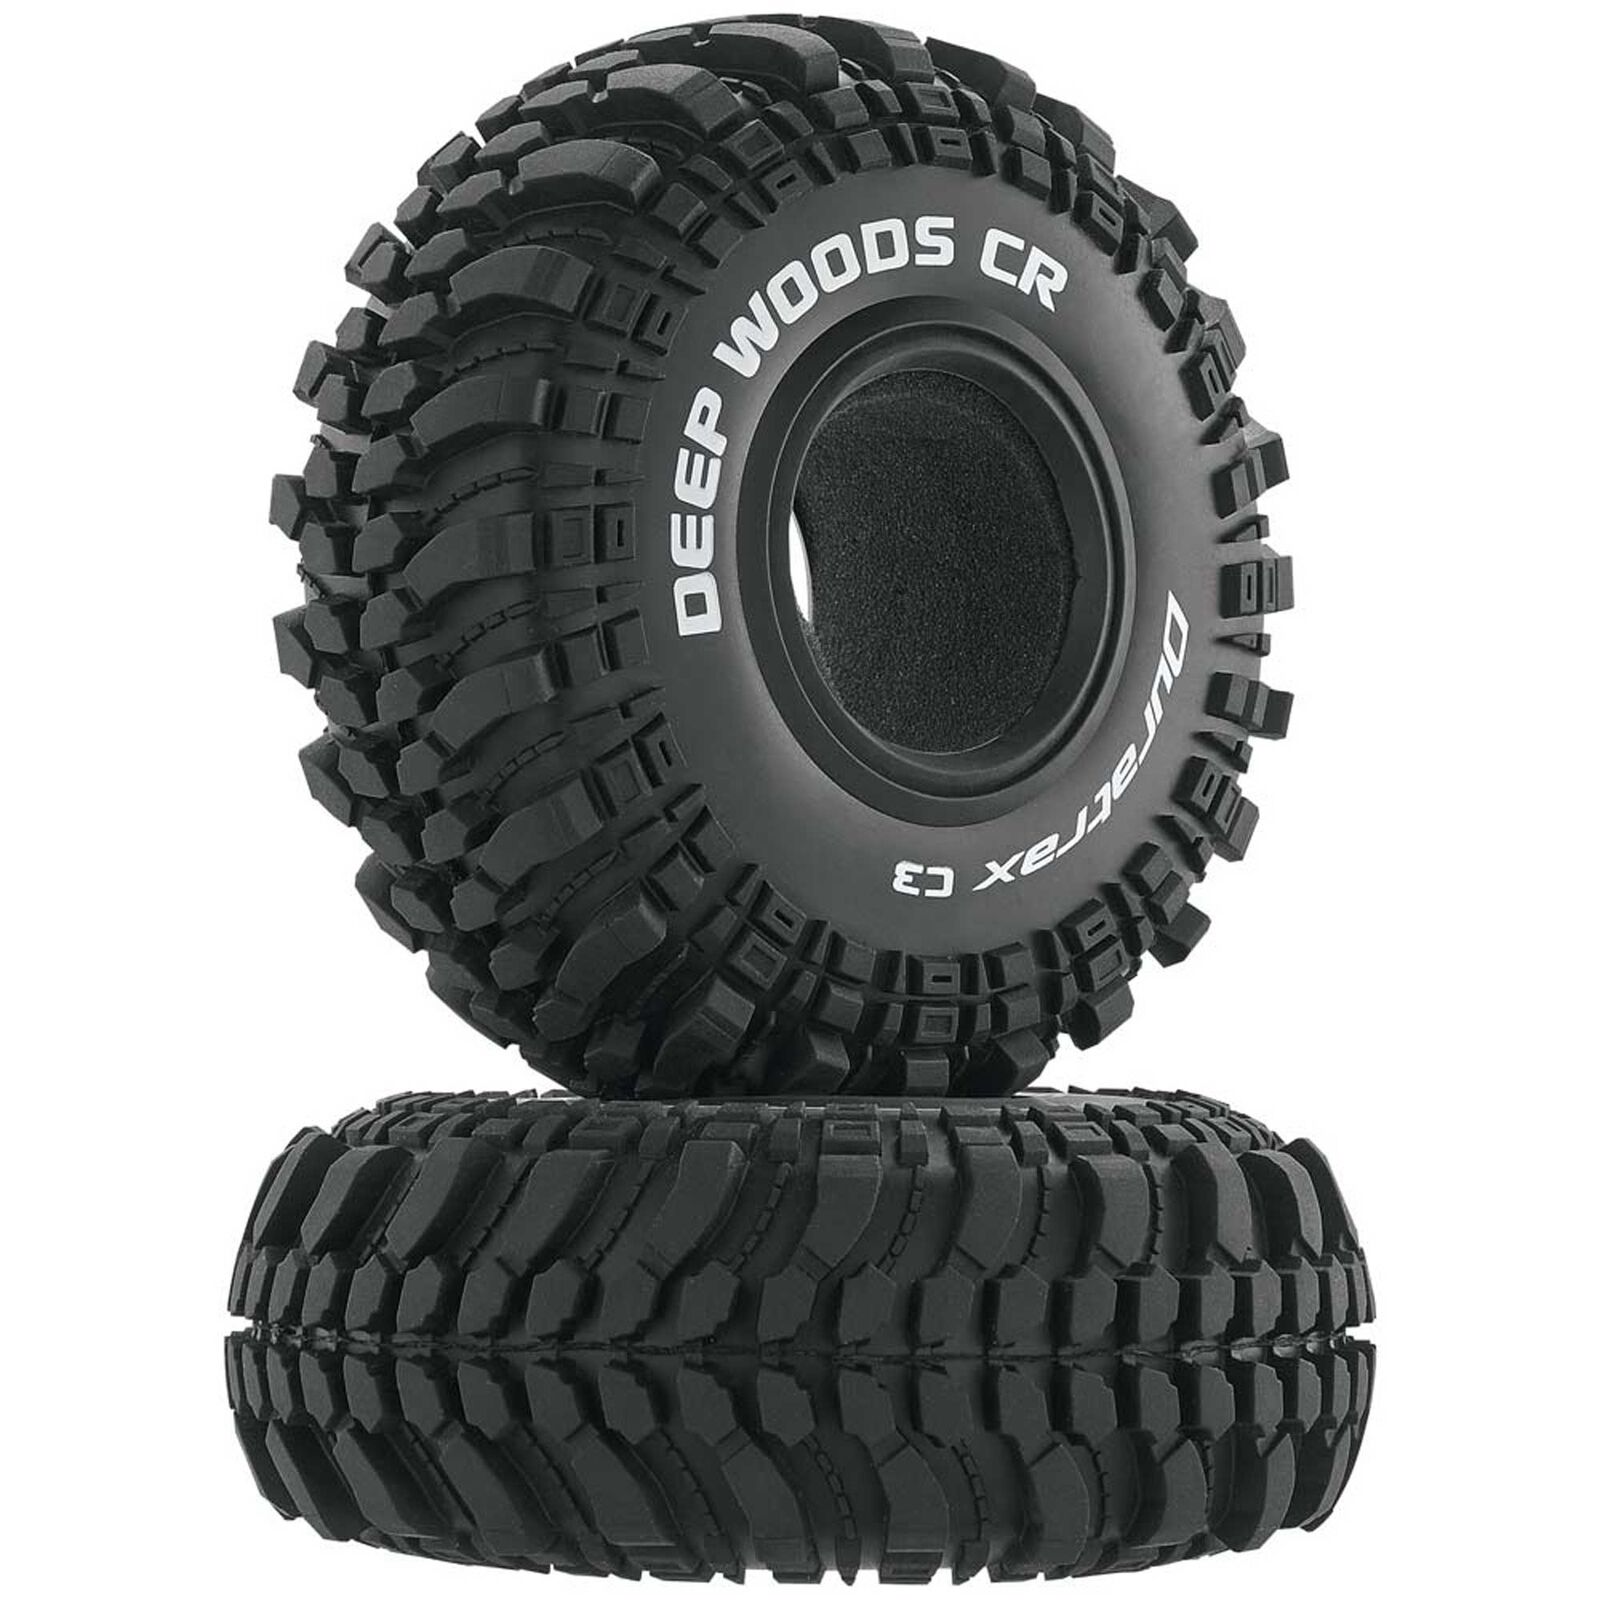 Deep Woods CR 2.2" C3 Crawler Tires (2)